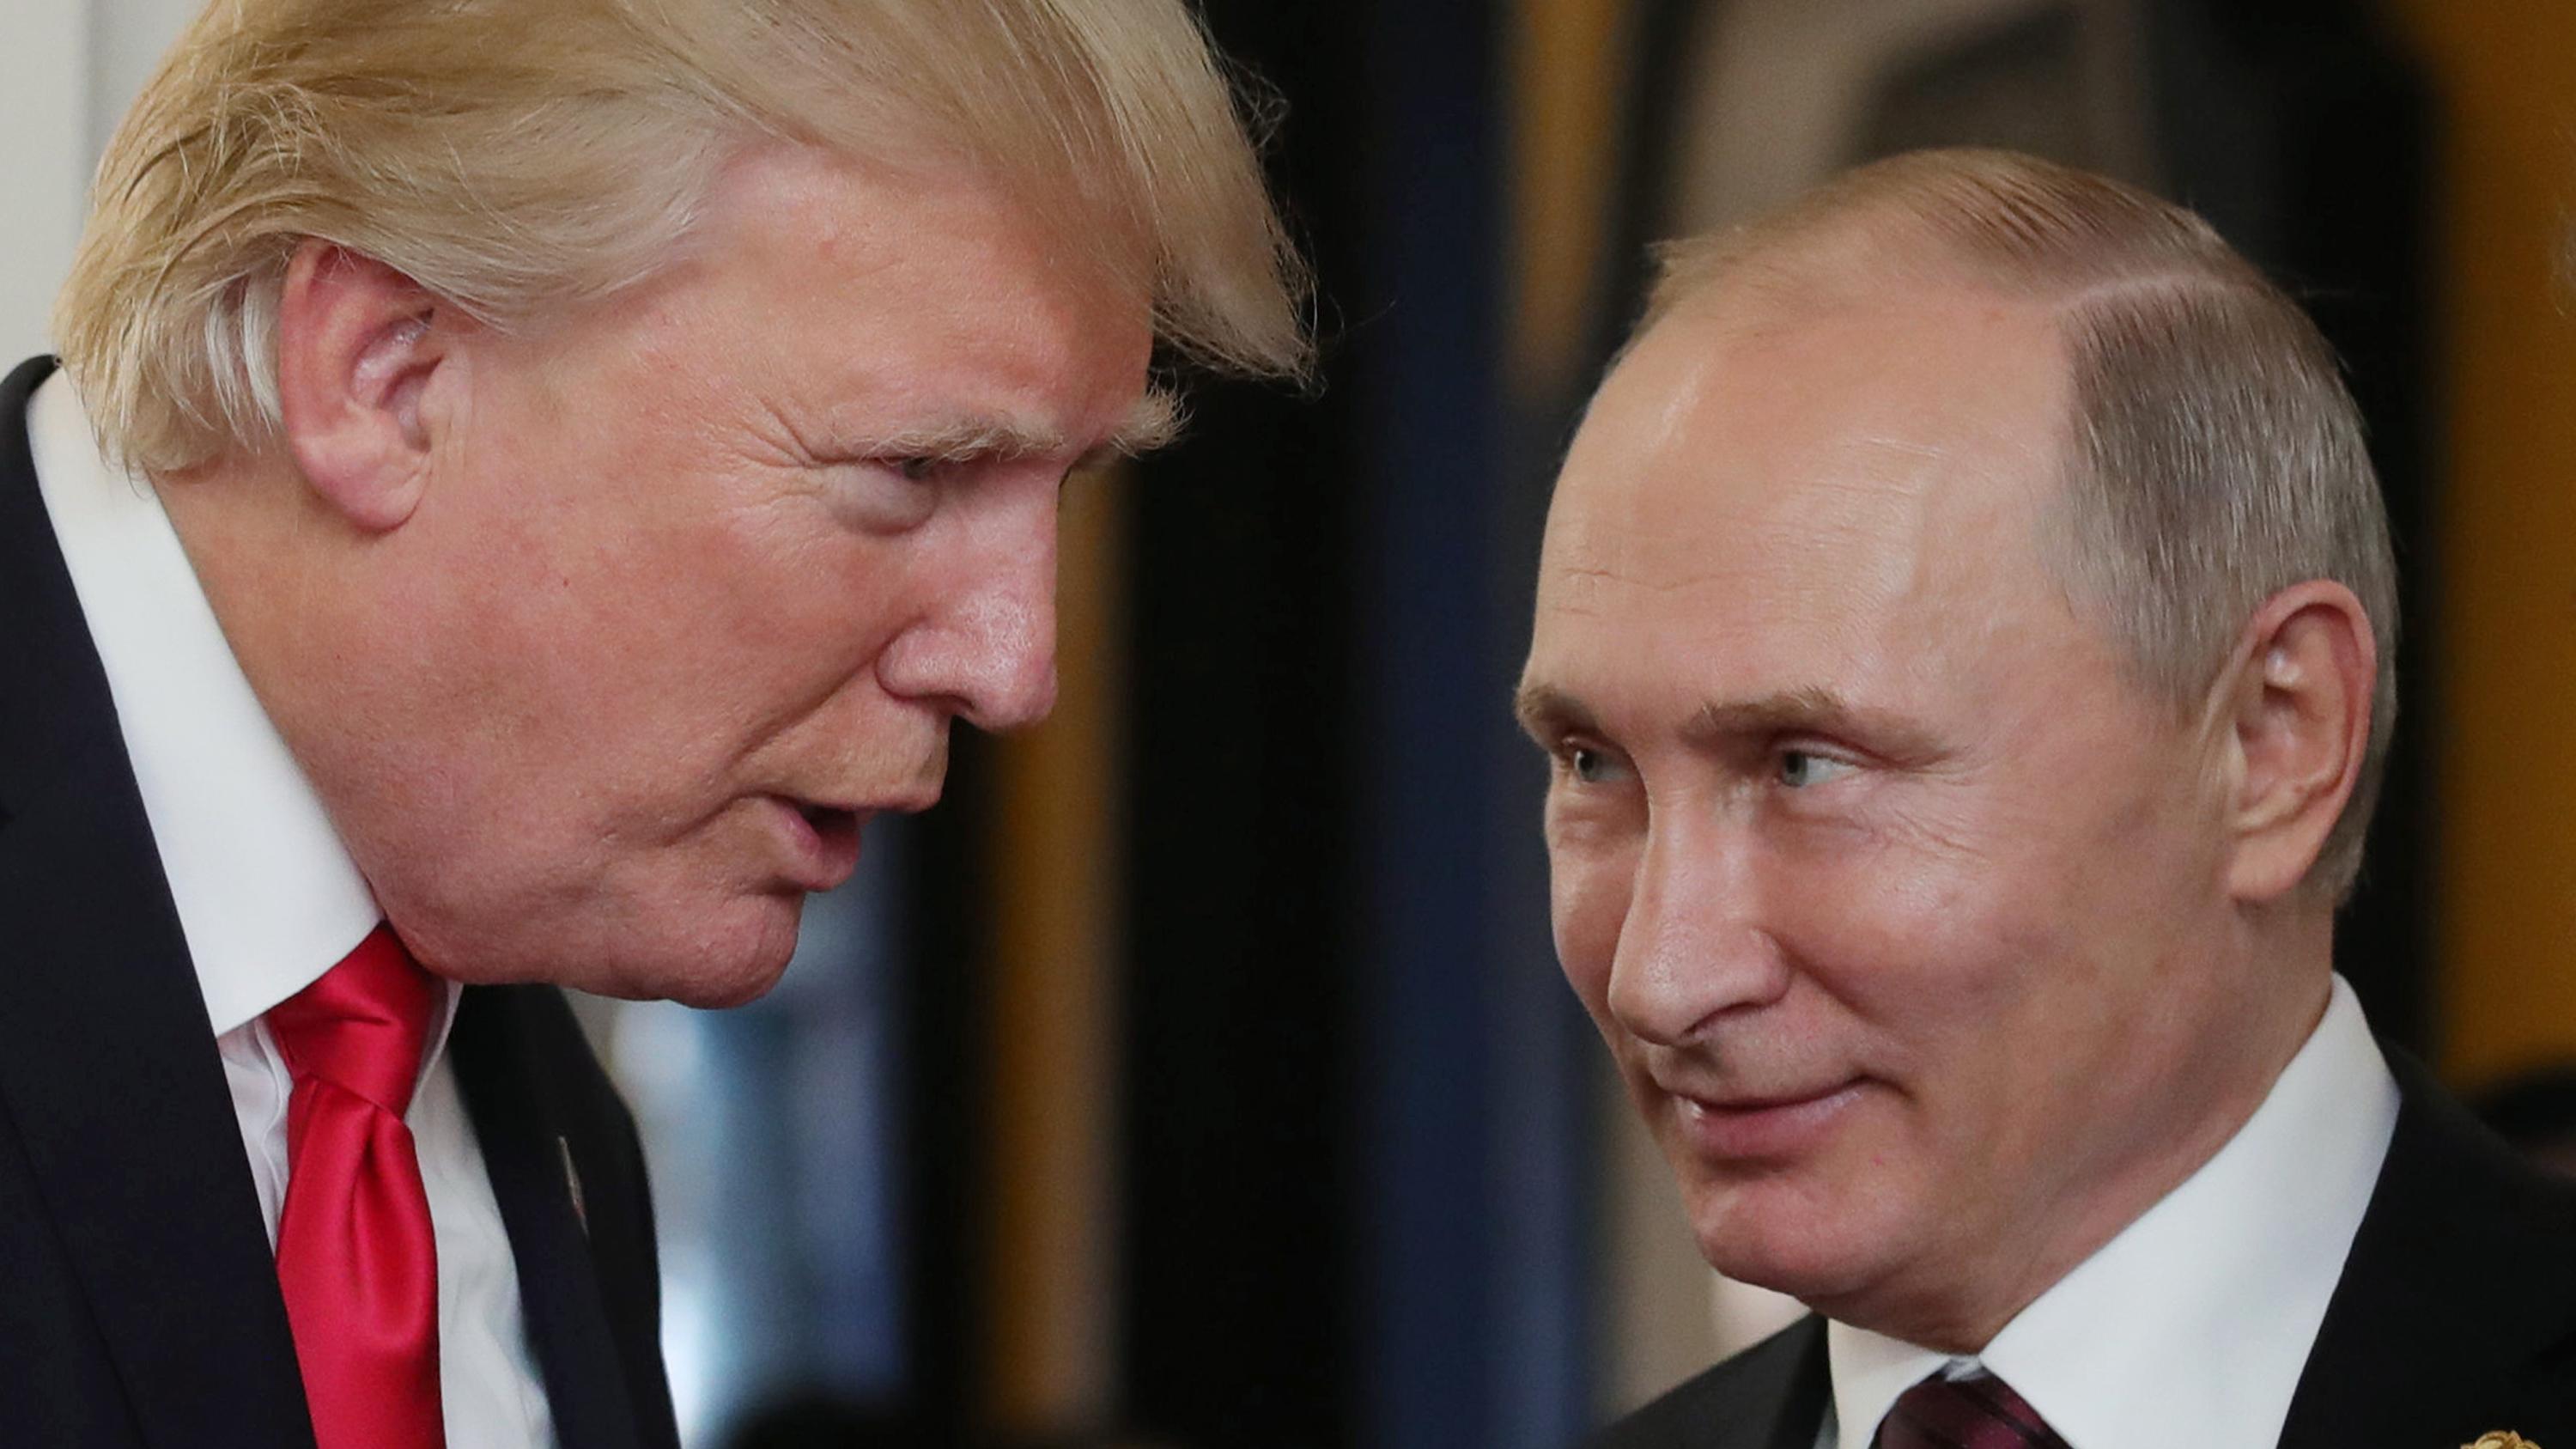 Trump Congratulating Russian President Putin on his Re-Election